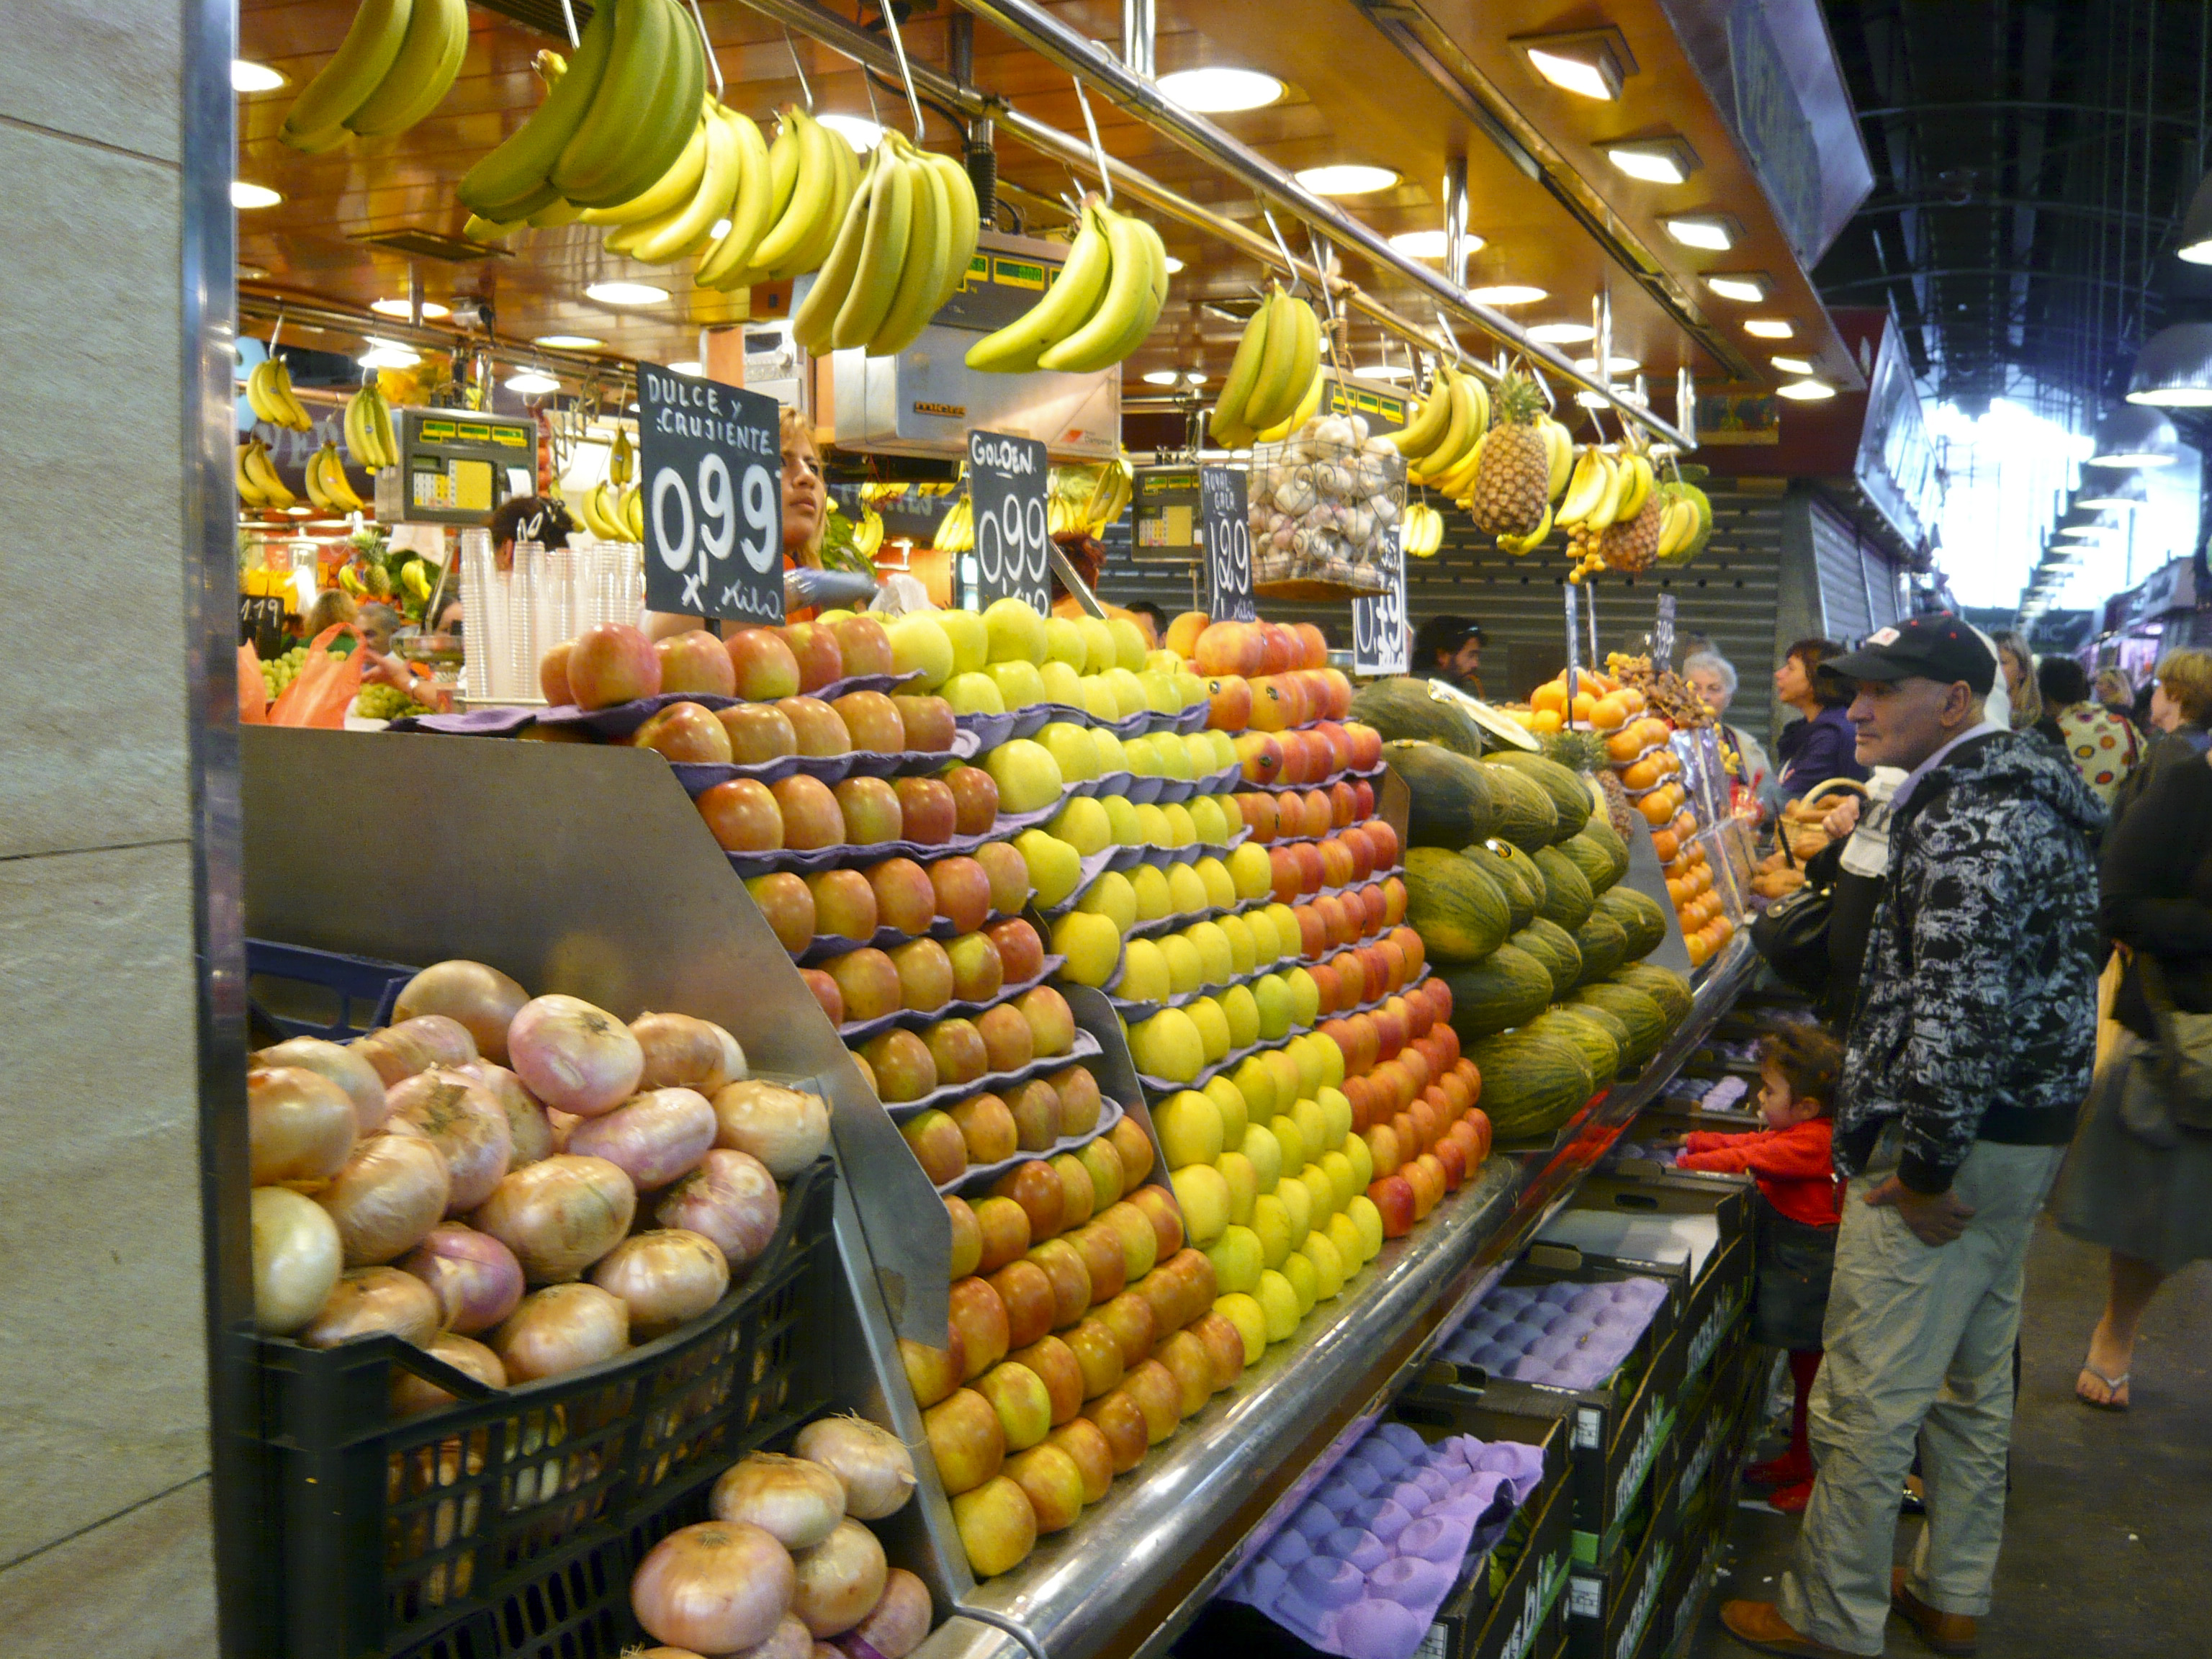 File:Fruit stall at Barcelona market (2925474480).jpg - Wikimedia ...